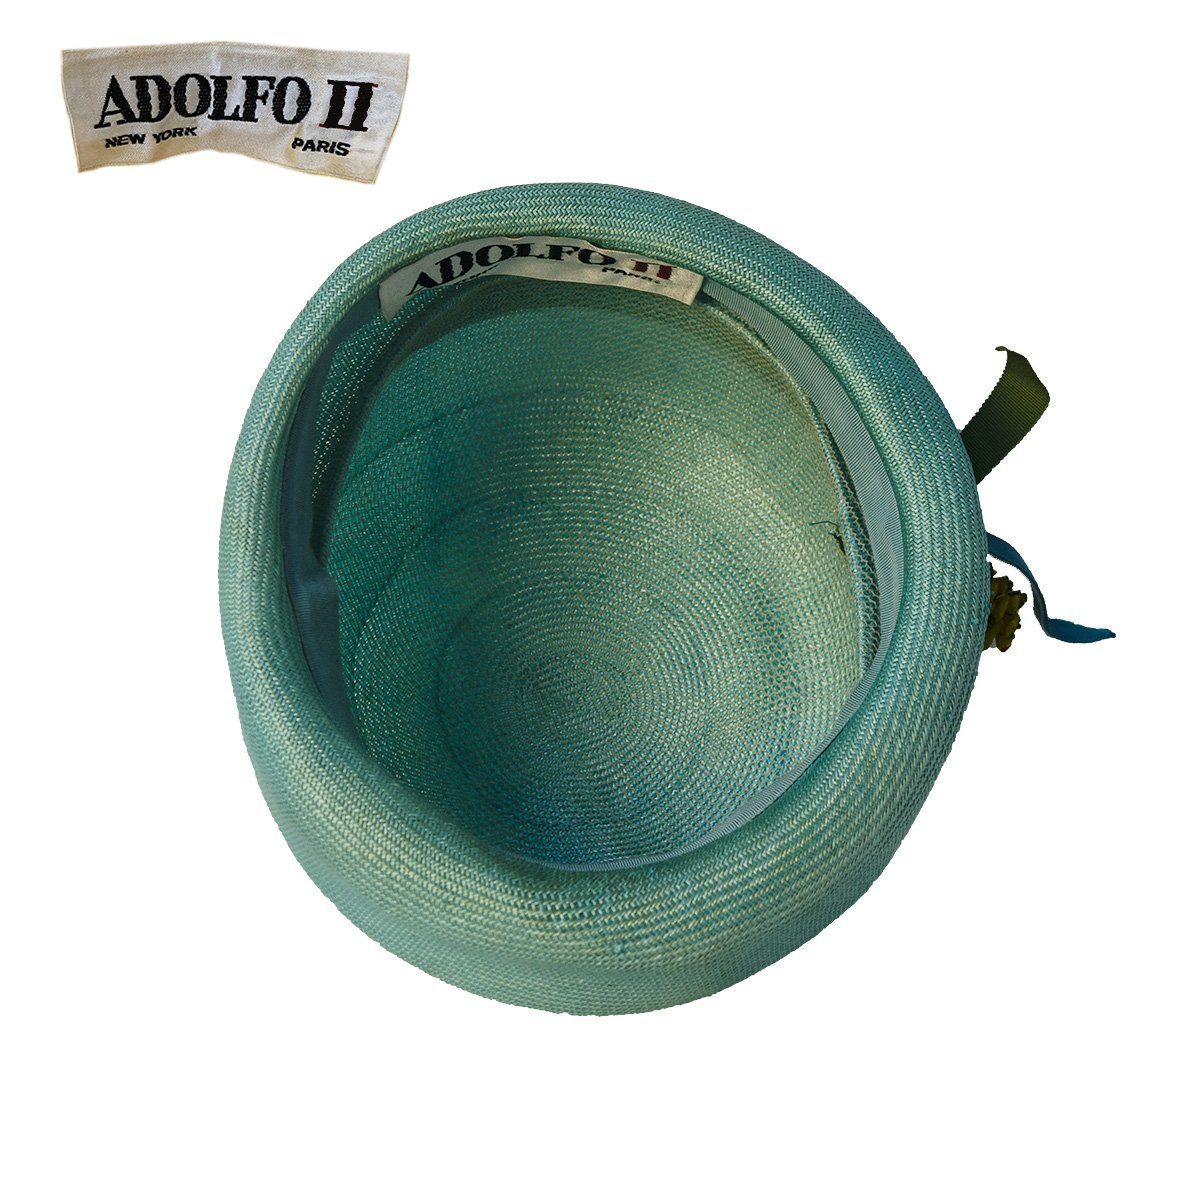 Vintage 1960s Adolfo II Aqua Blue Straw Cloche, Hat Size 22